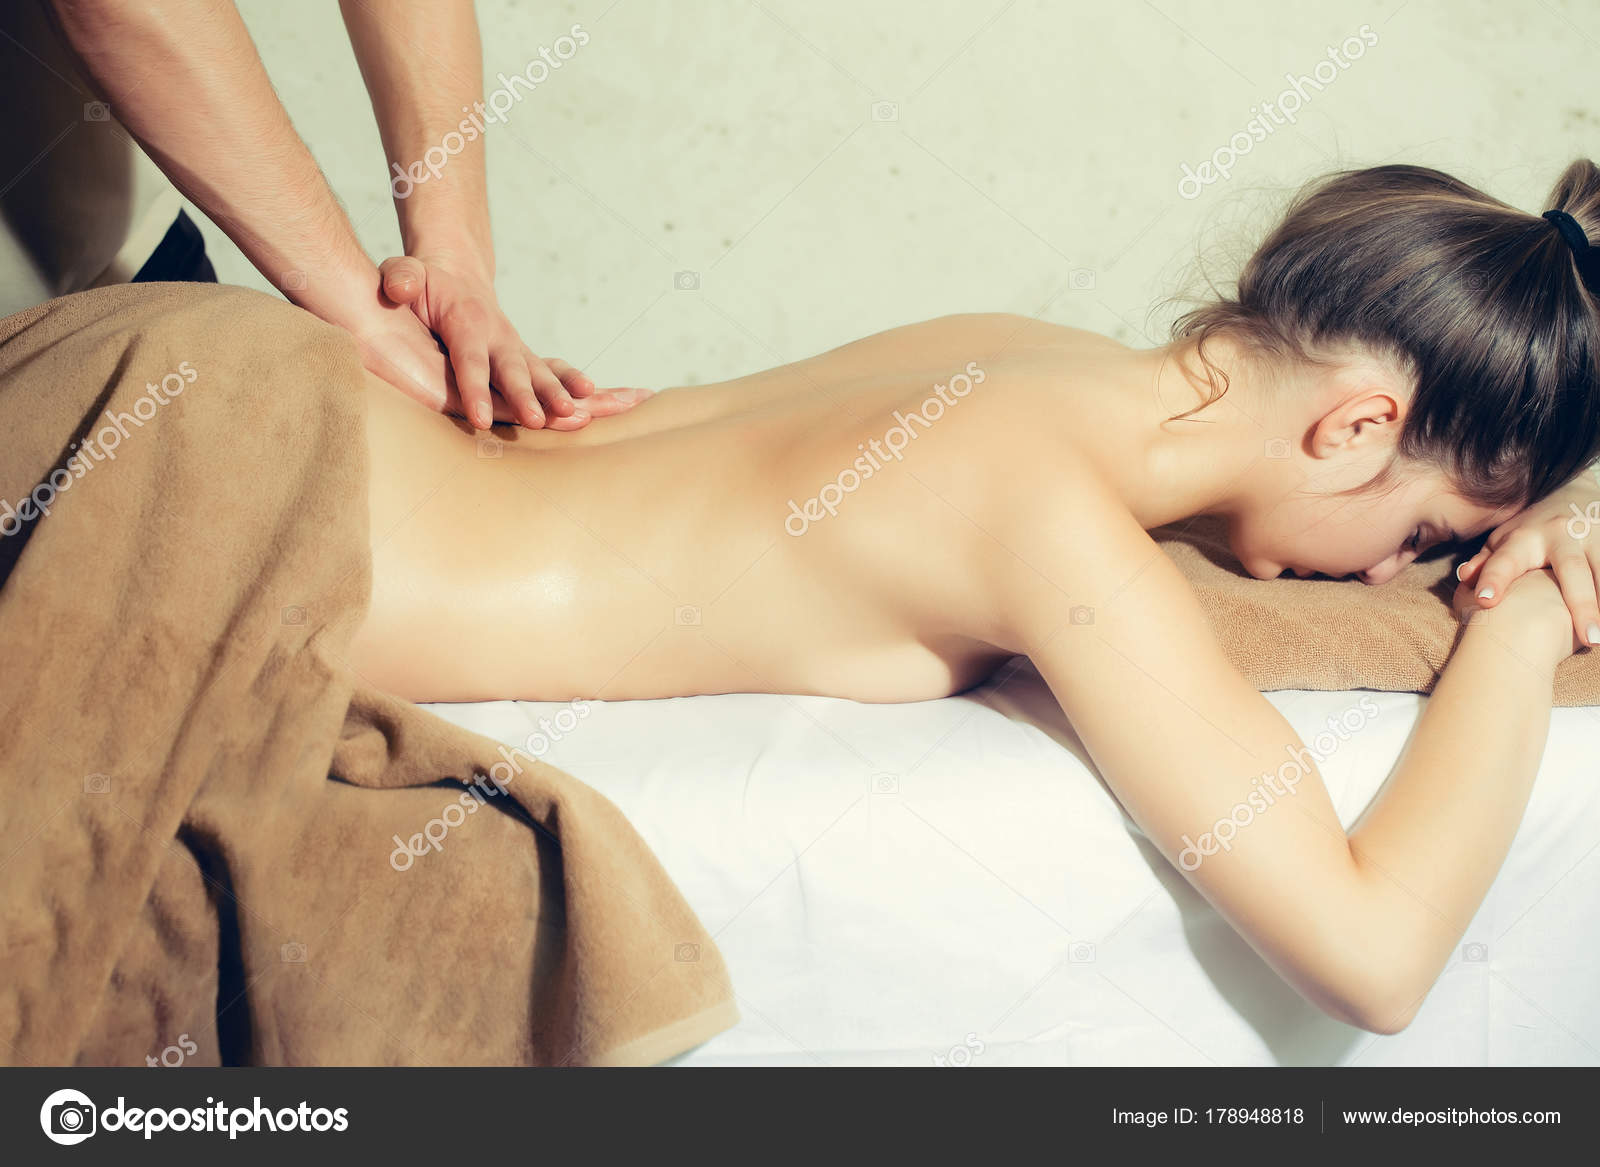 Erotic Amsterdam Massage